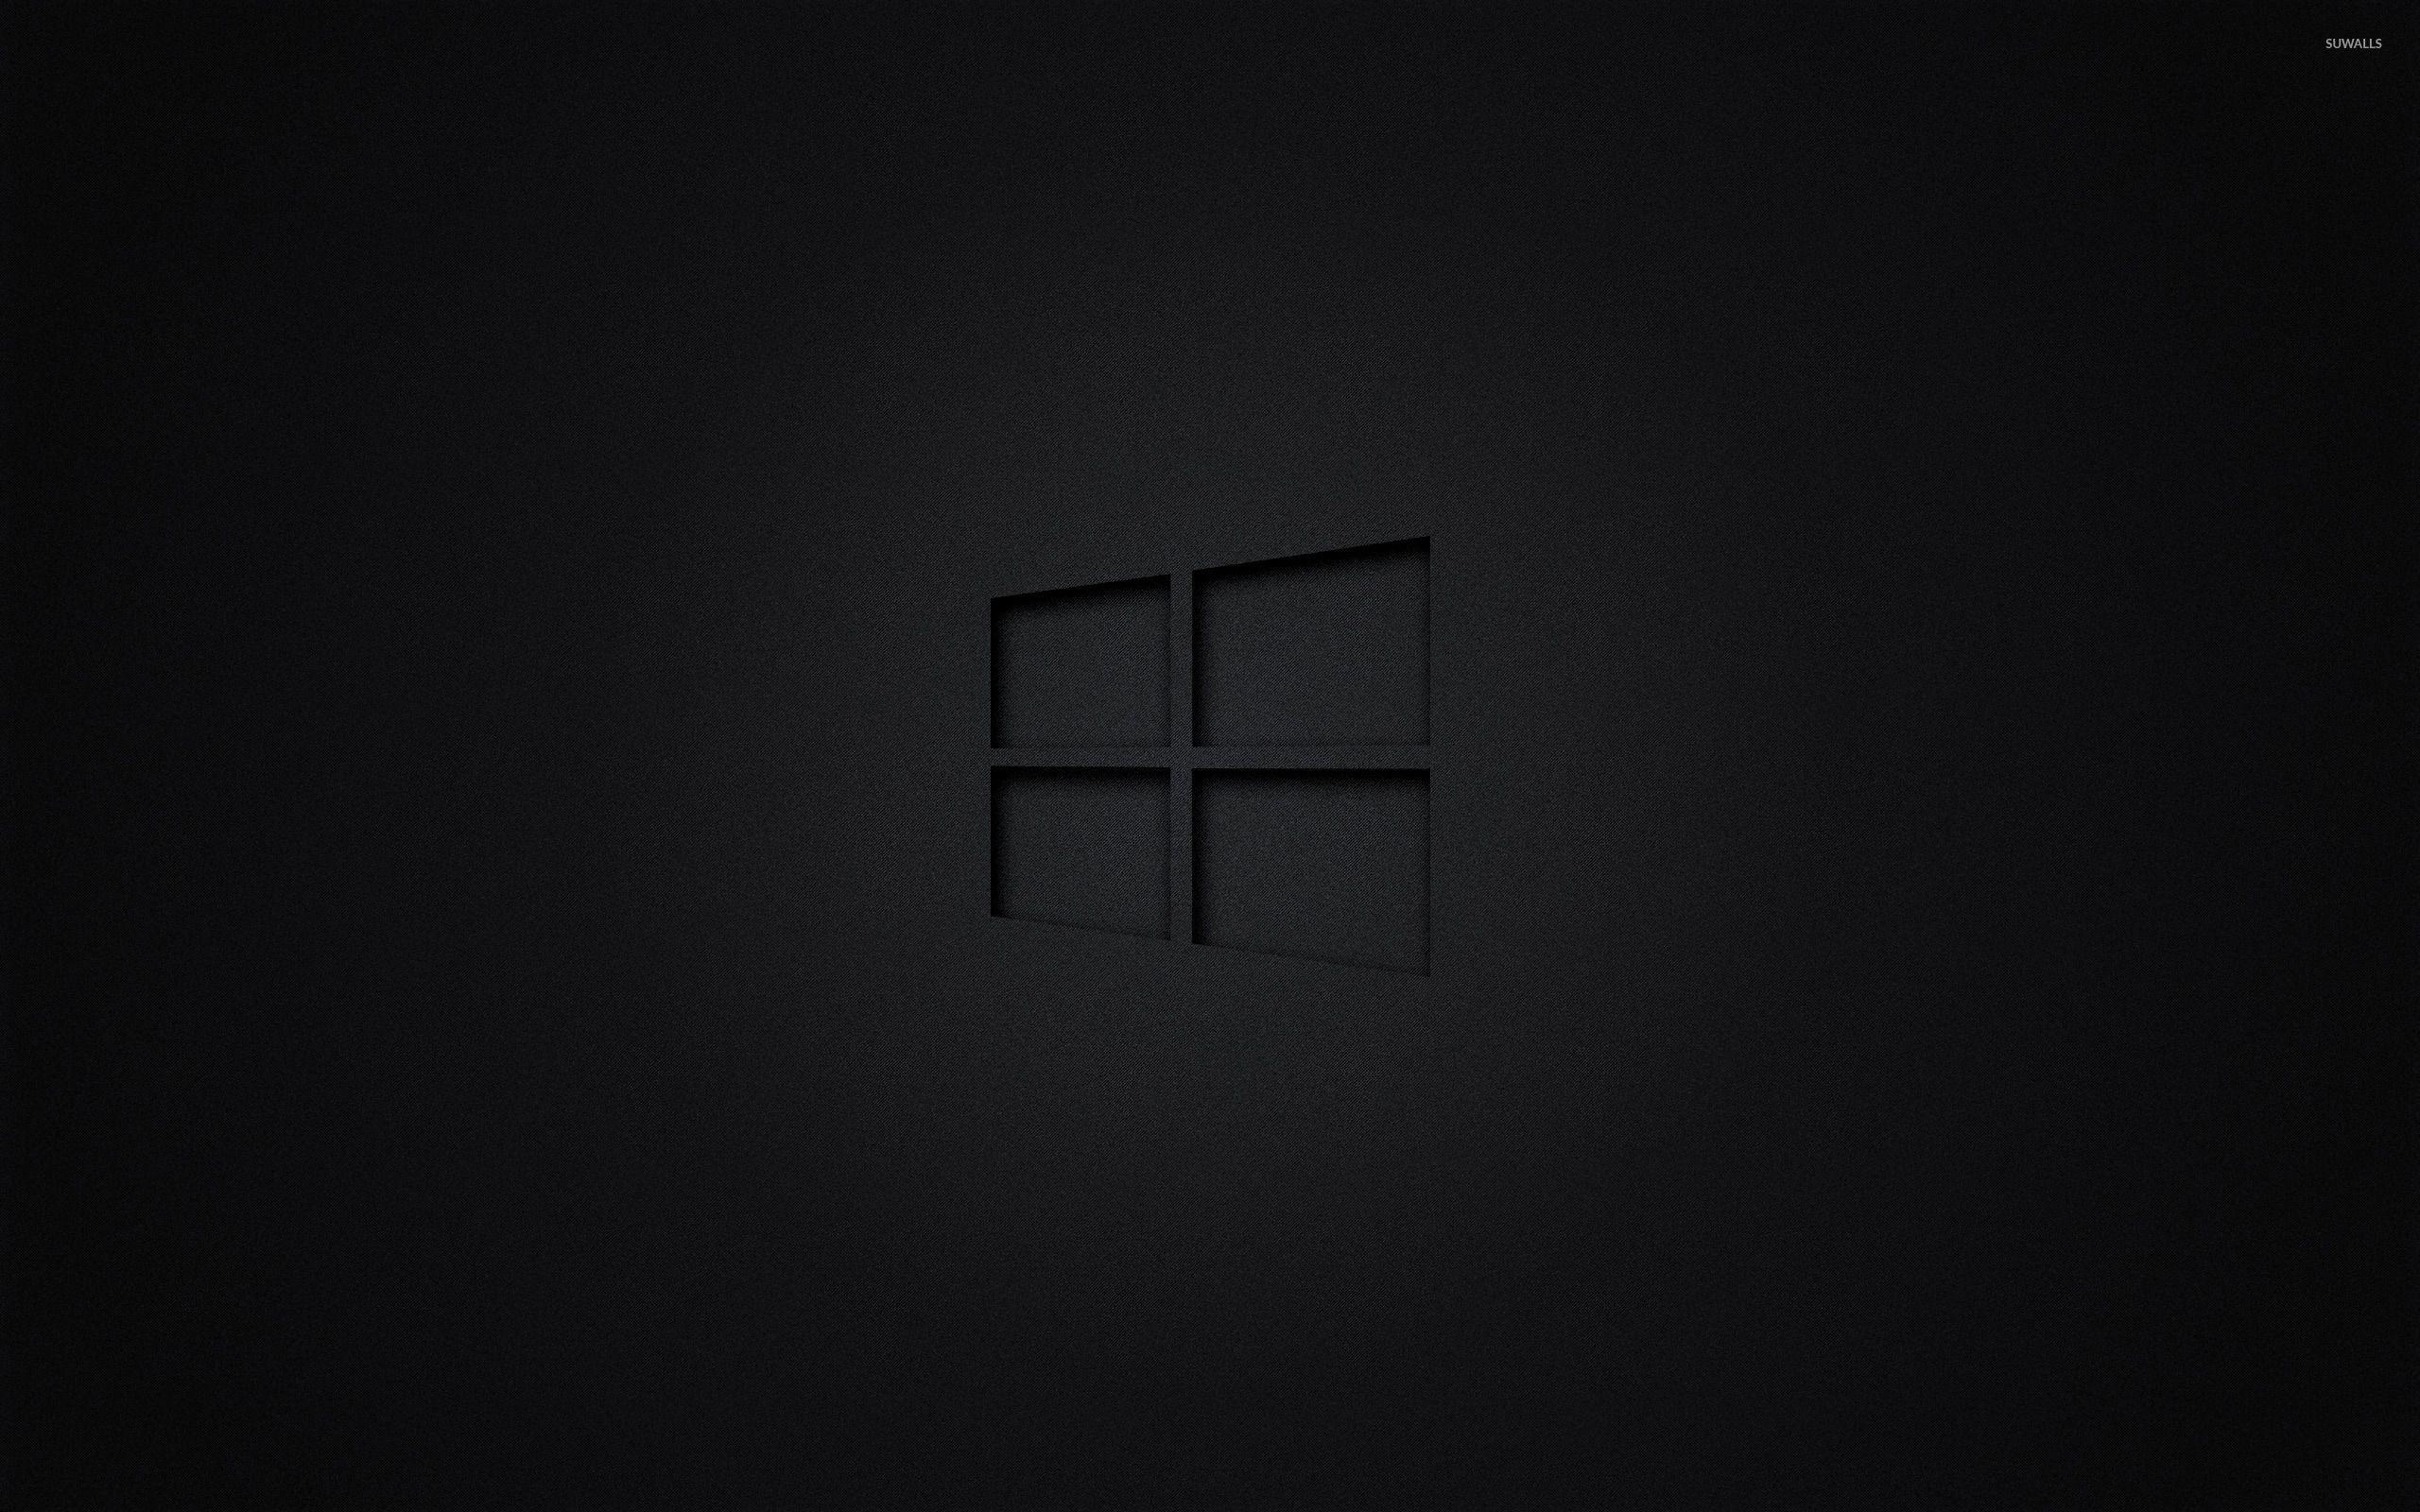 Black Windows Red Logo - Windows 10 transparent logo on black wallpaper Computer, windows ...